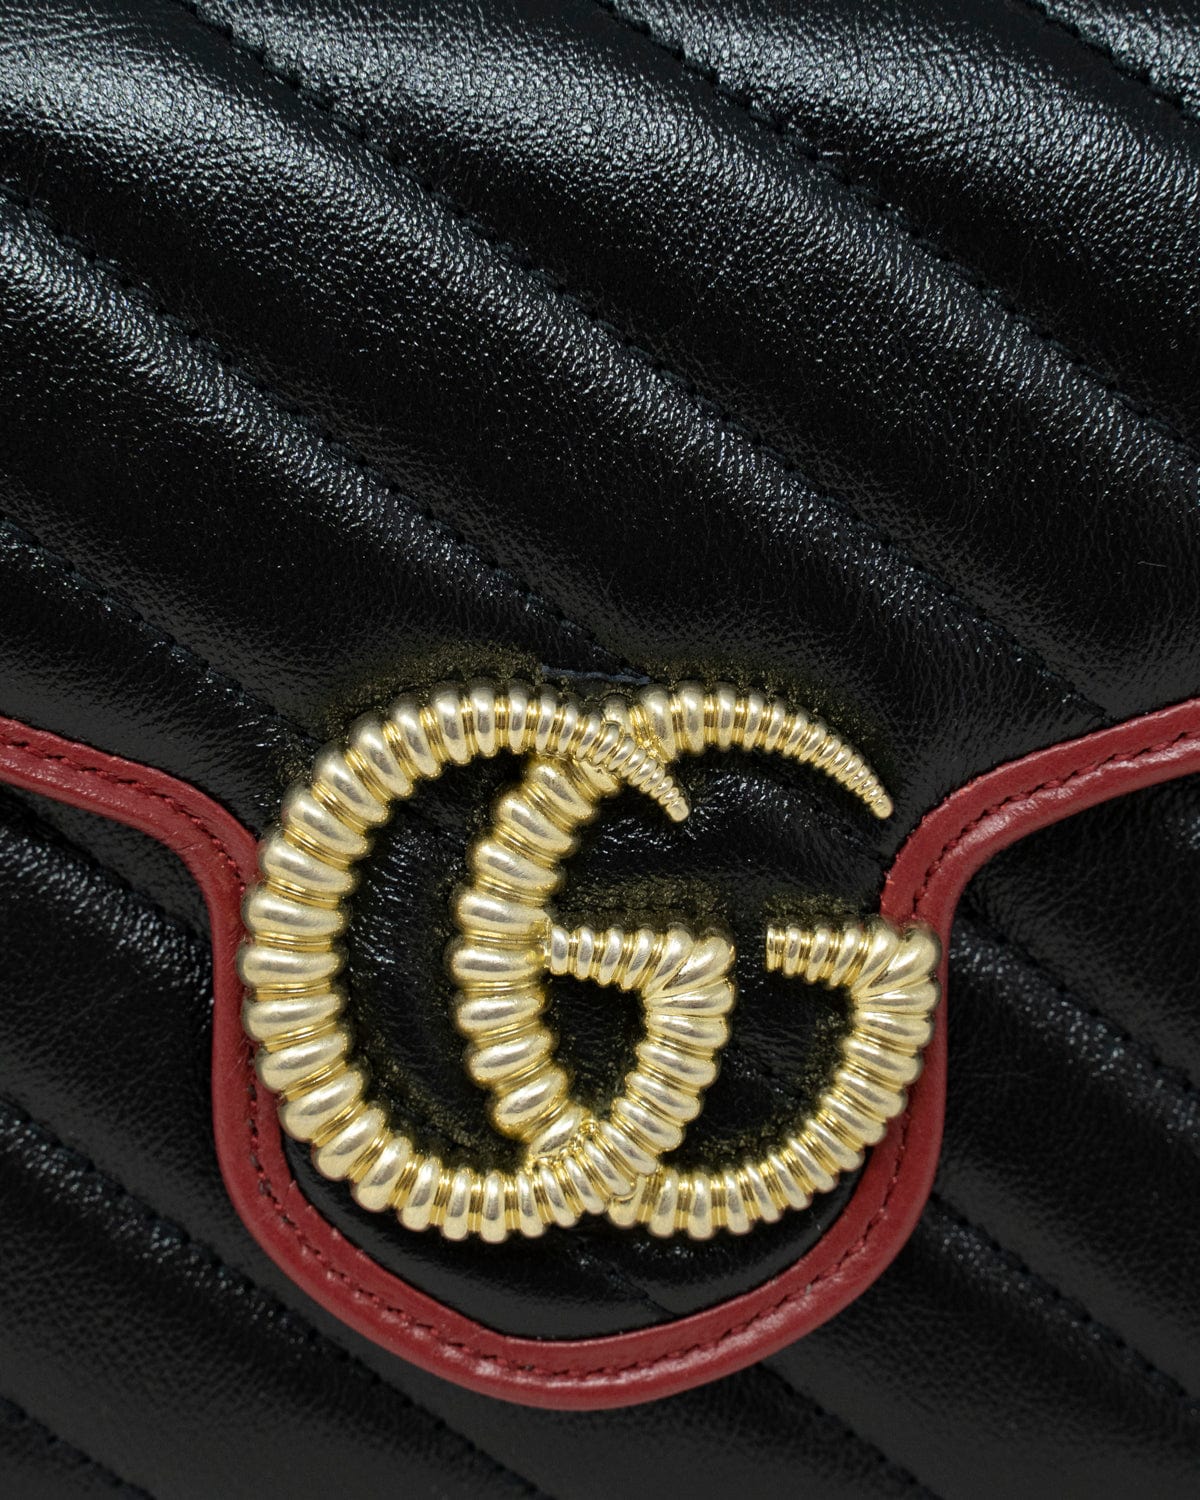 Gucci Gucci Black & Red Marmont Torchon WOC - ASL2486